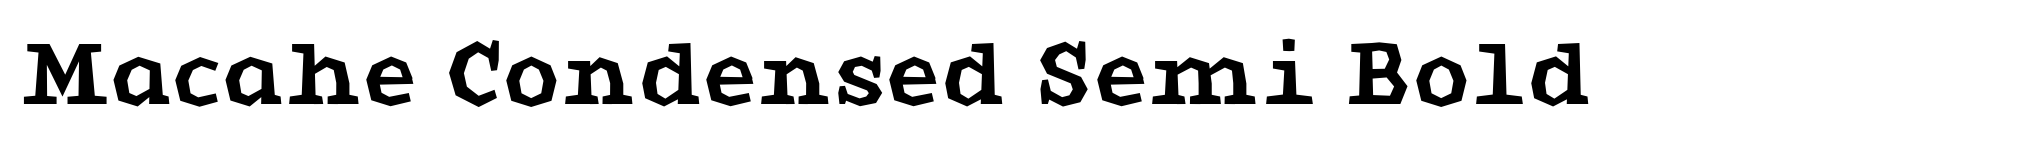 Macahe Condensed Semi Bold image